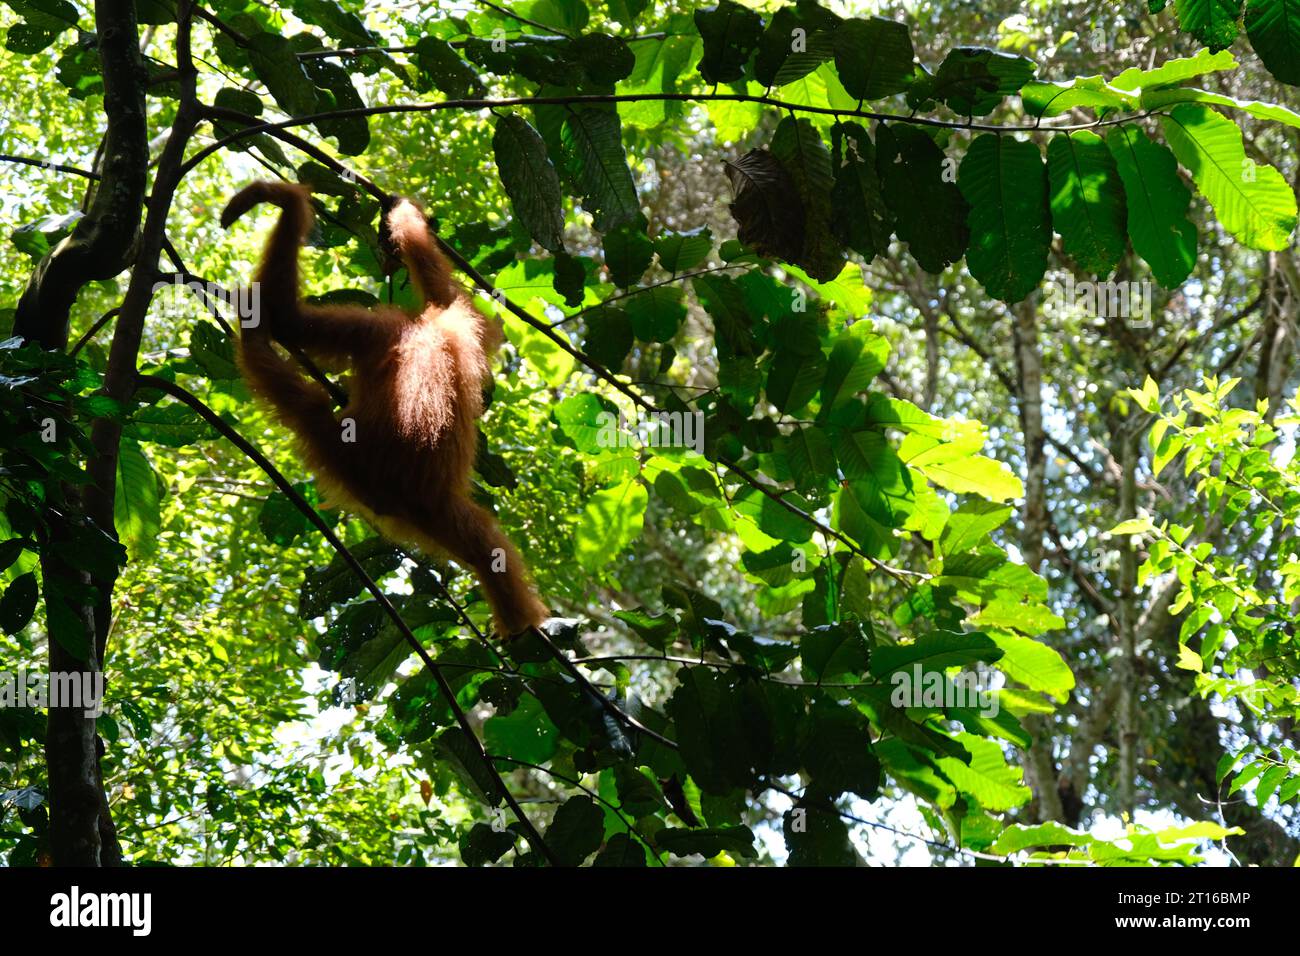 In the heart of Bukit Lawang, an orangutan embodies the wild essence of Sumatra's jungles. Stock Photo